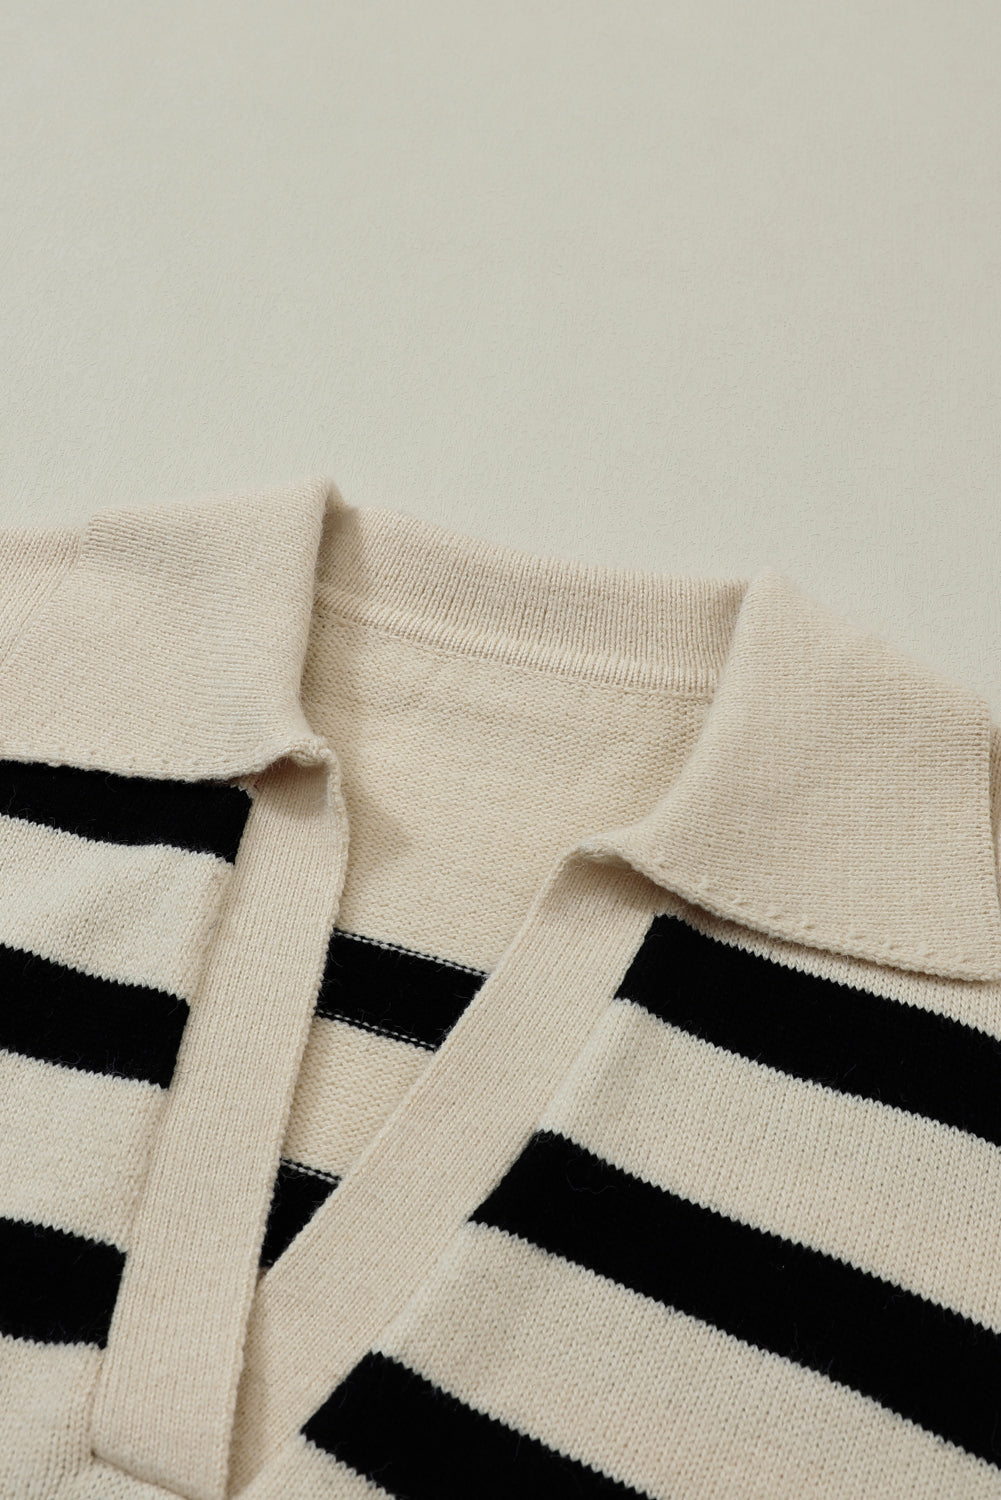 Apricot Striped Knit Drop Shoulder Collared V Neck Sweater